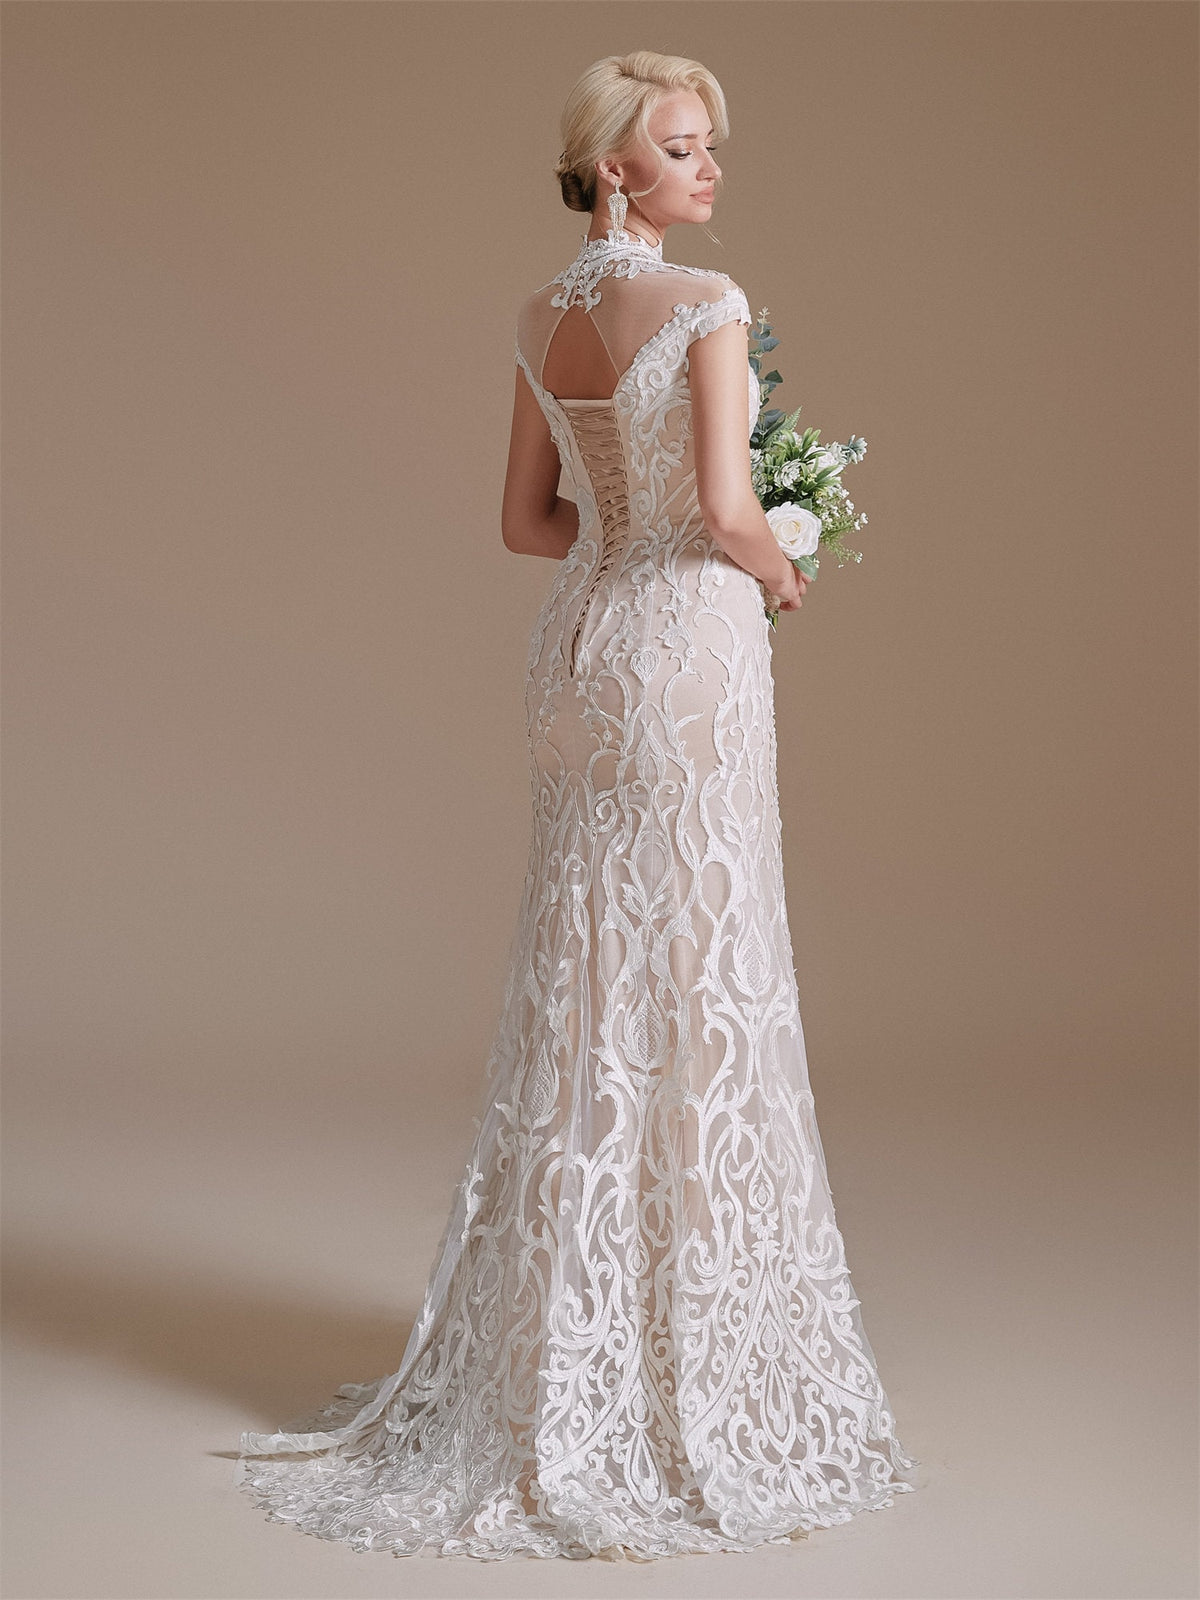 Beautiful Vintage Lace Sheath Wedding Dress Bridal Gown Short Cap Sleeves High Lace Collar Corset Back Short Lace Train